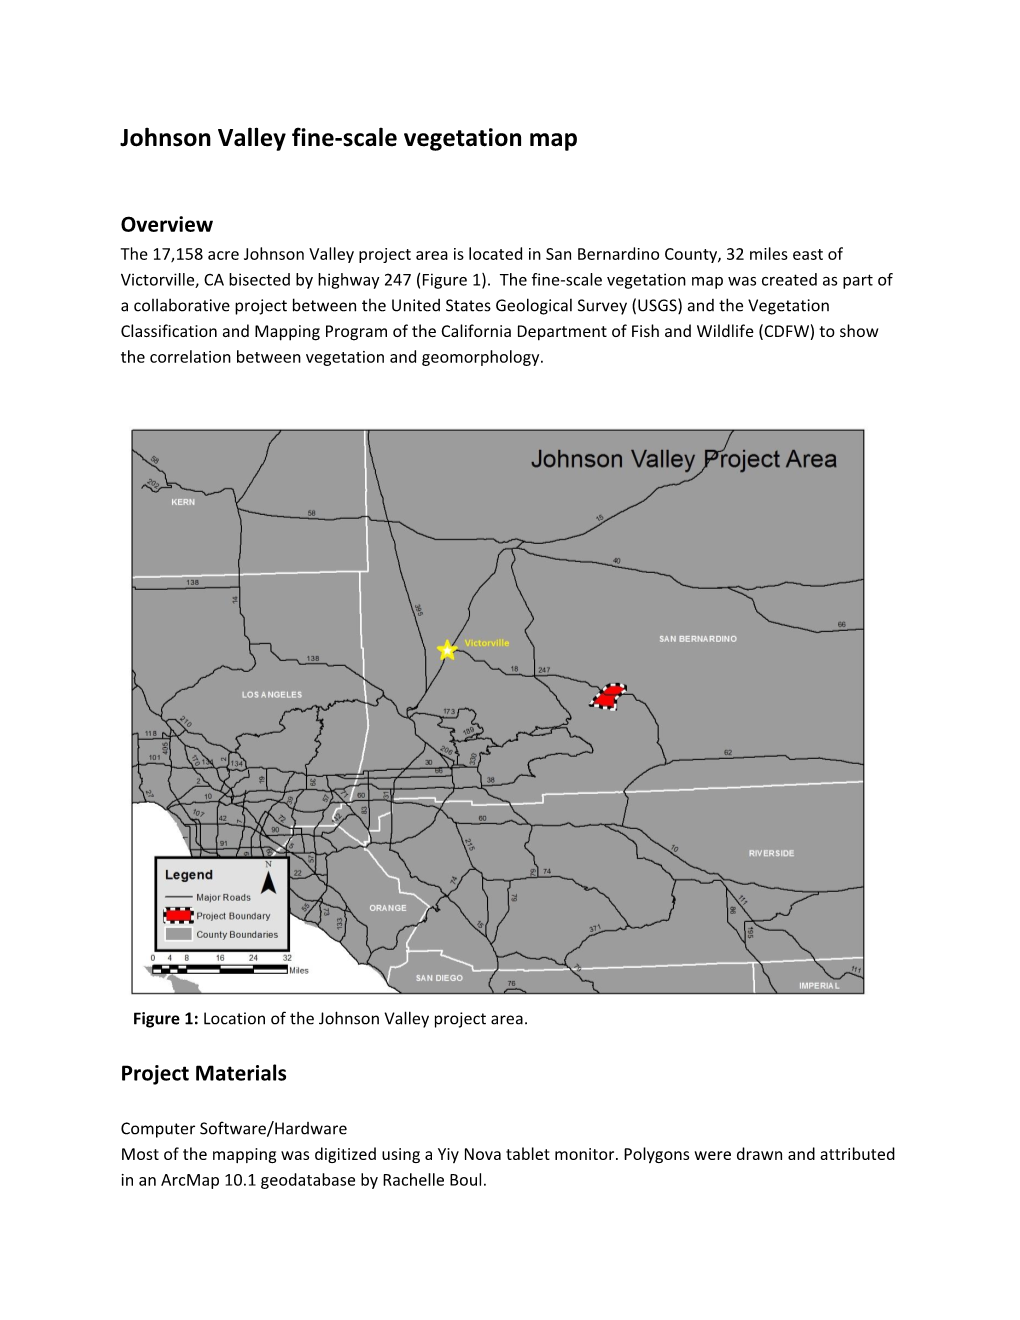 Johnson Valley Fine-Scale Vegetation Map Metadata Report